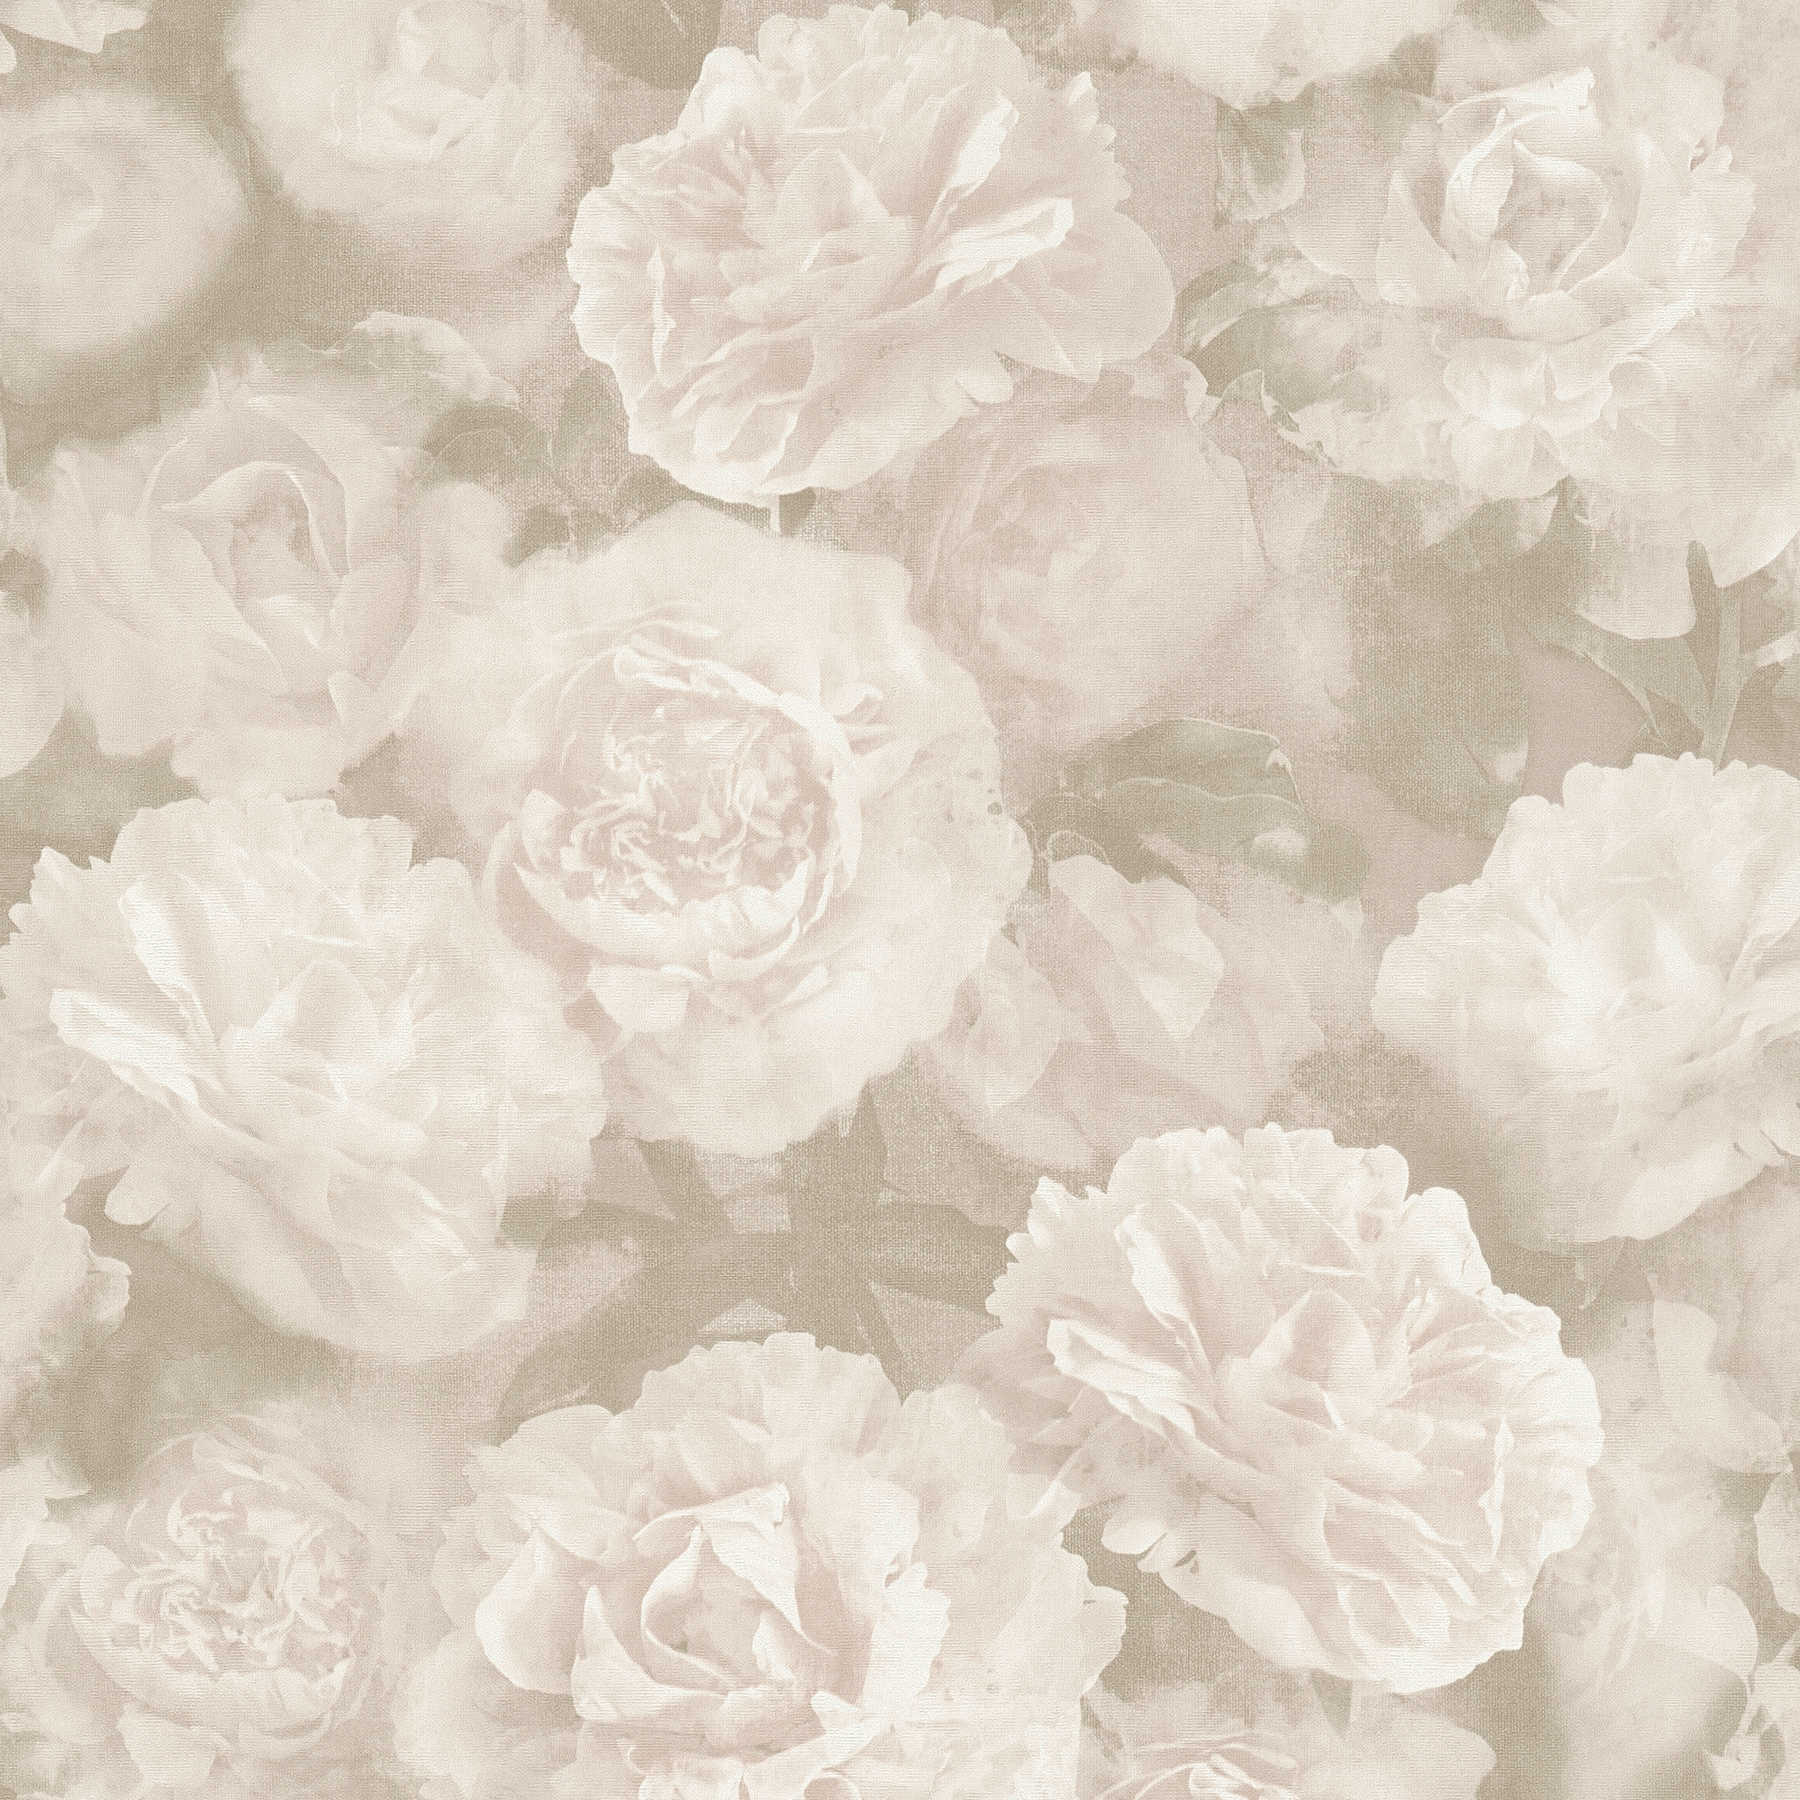         Vintage look floral wallpaper roses - beige, cream, white
    